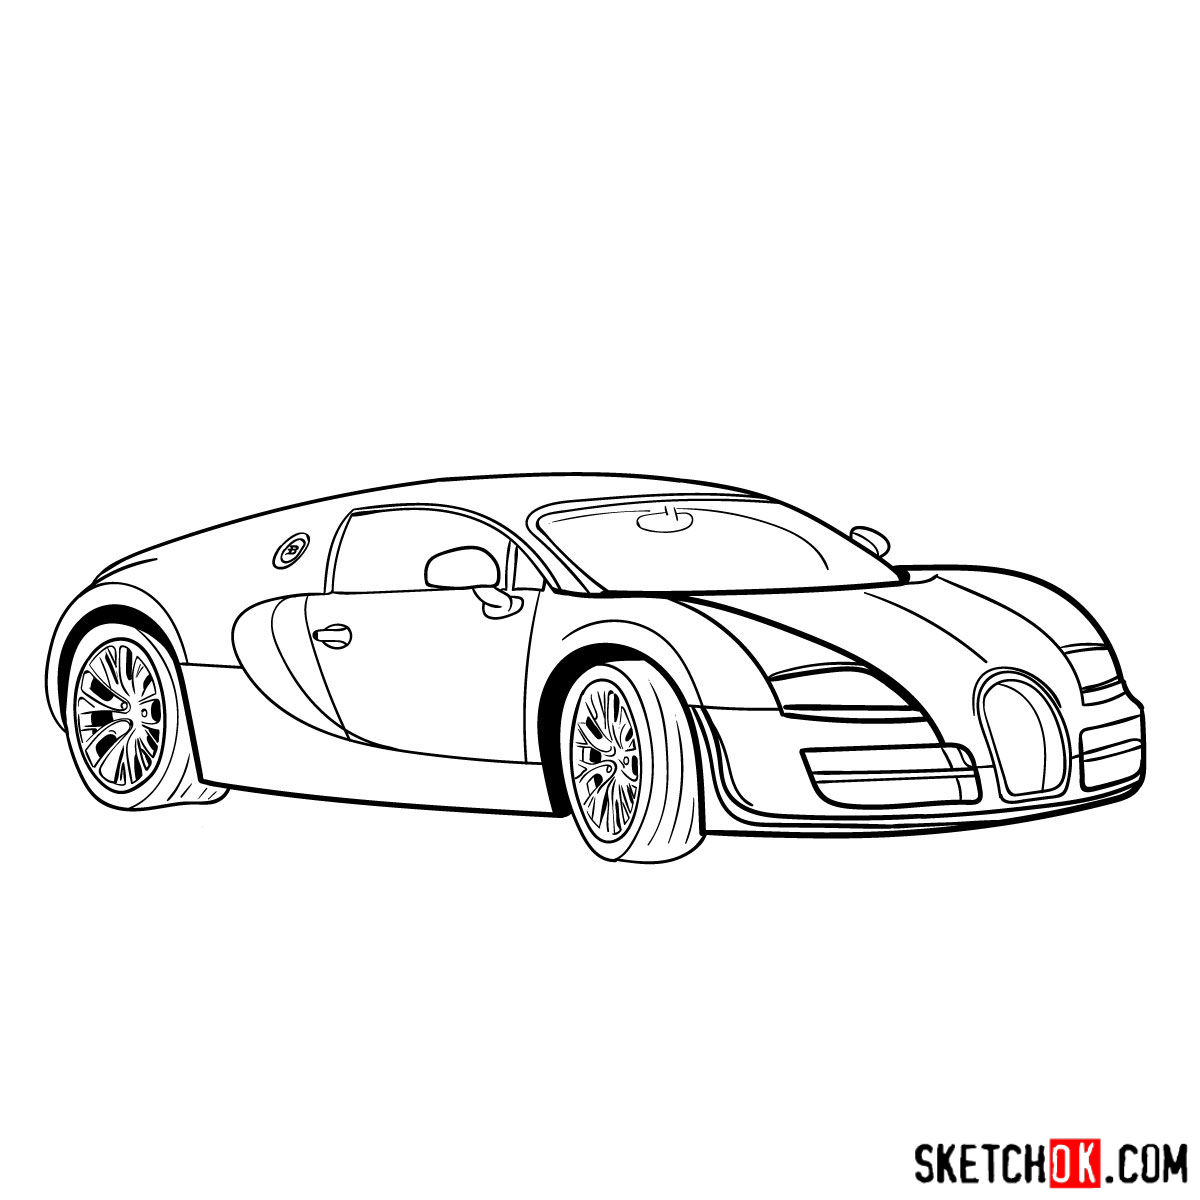 How to draw Bugatti Veyron 16.4 Super Sport - step 13